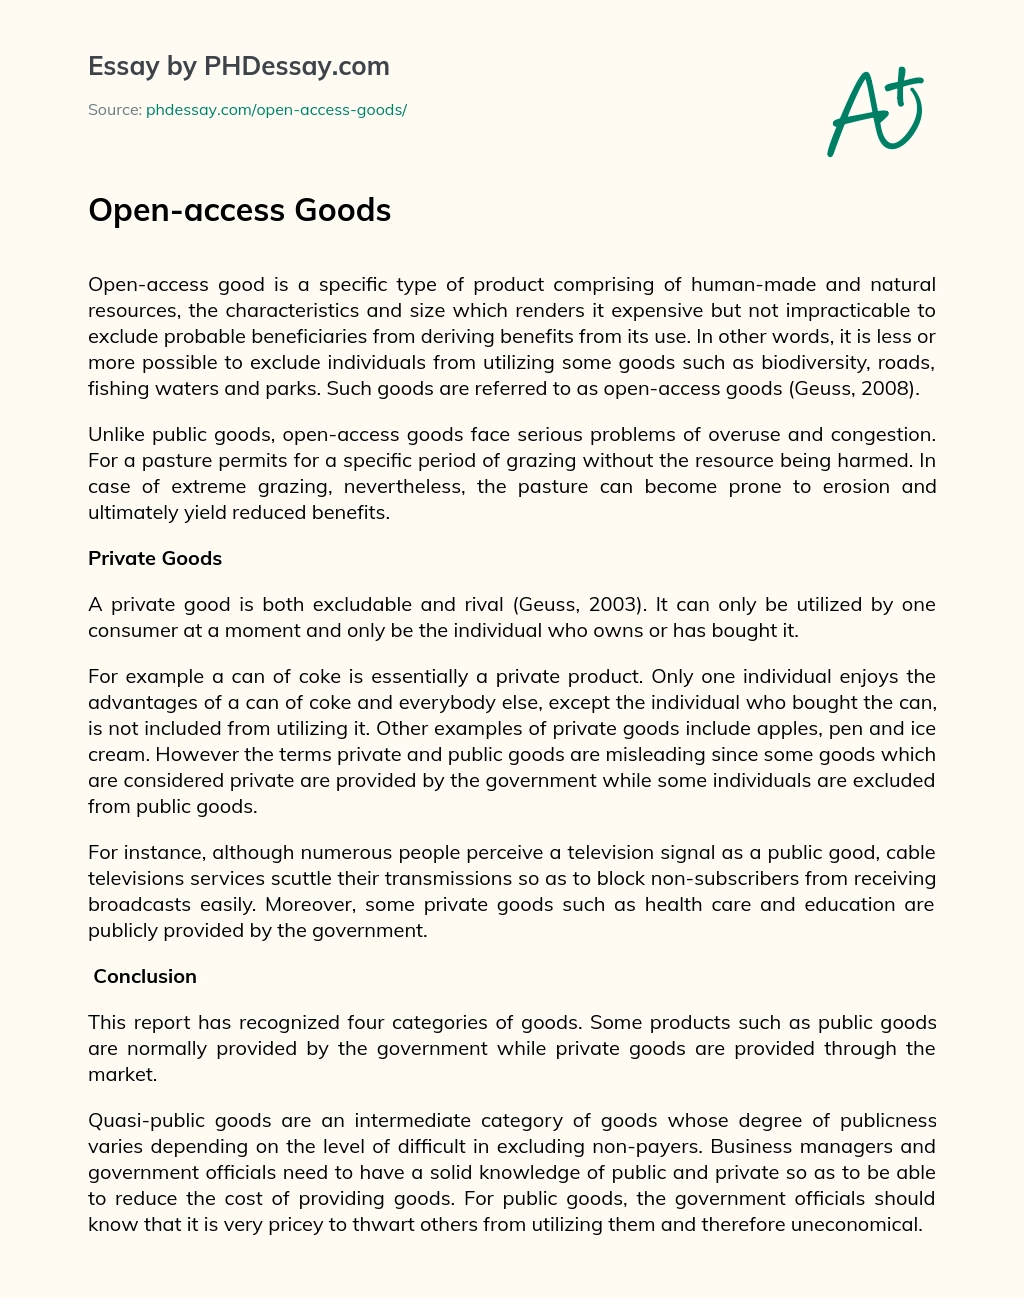 Open-access Goods essay